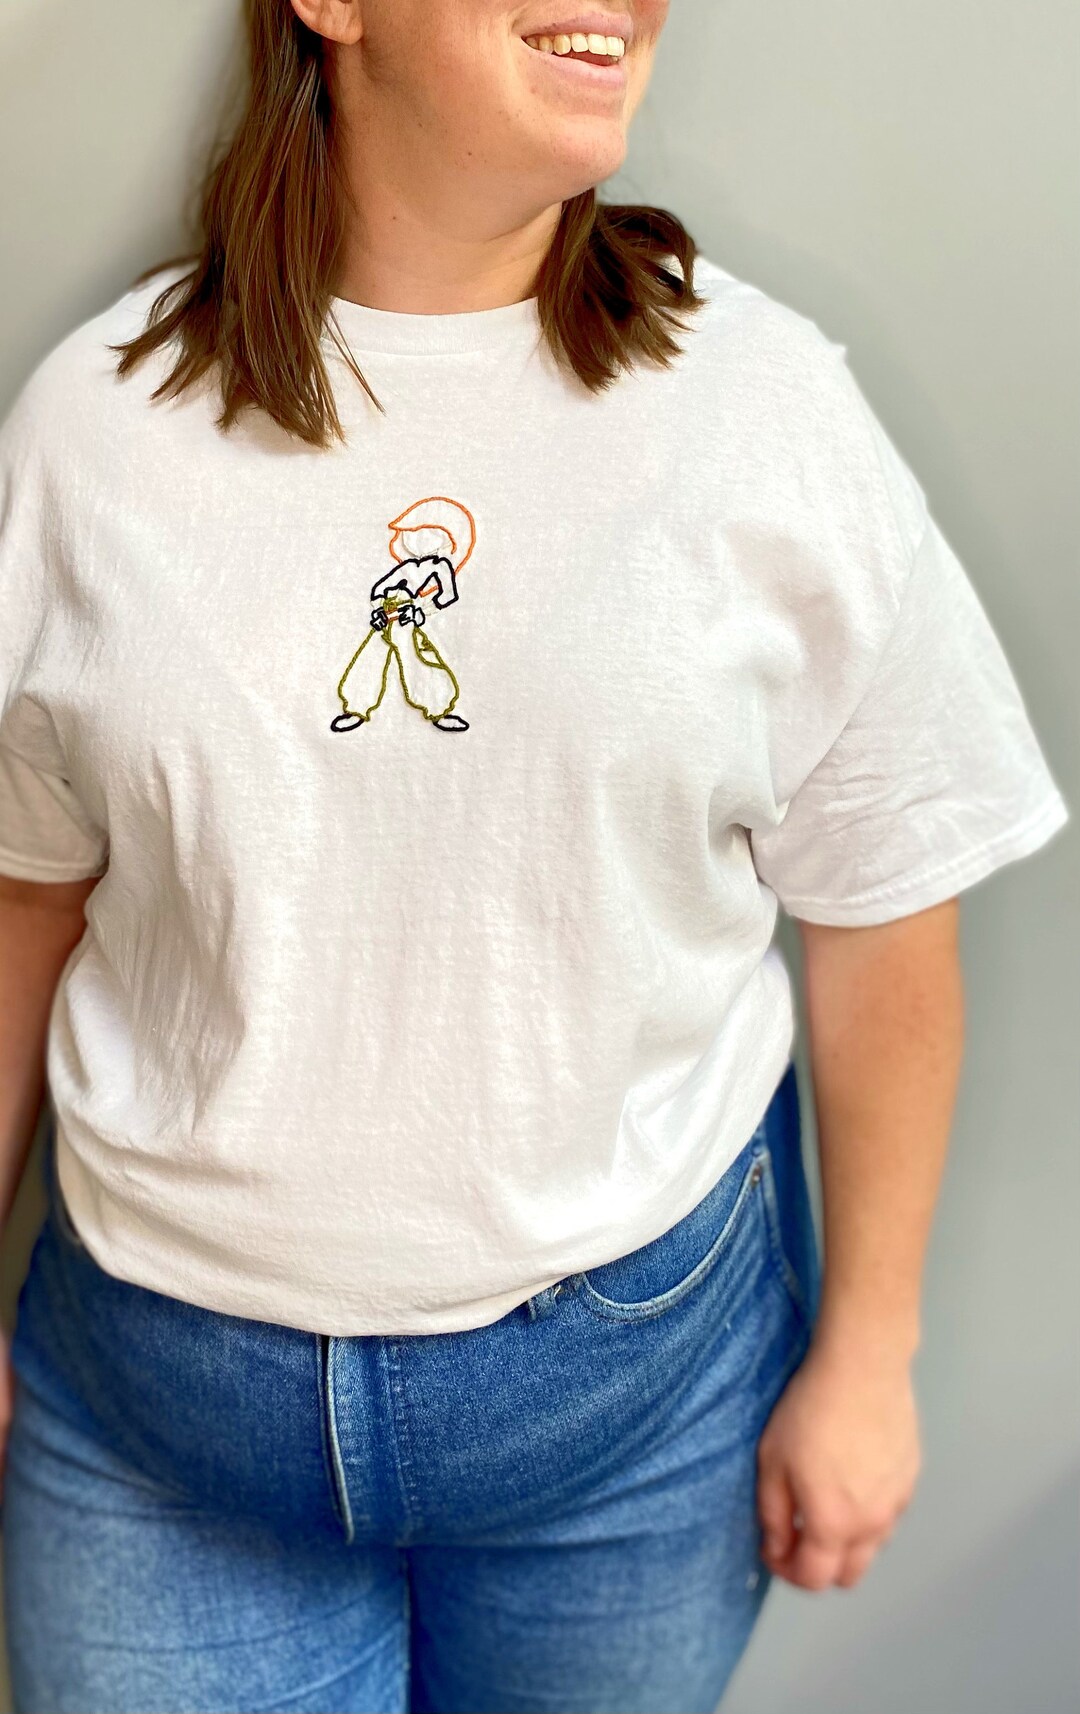 Kim Possible Shirt, Nostalgia Disney Cartoon, Y2K Character, Hand Embroidered Tshirt